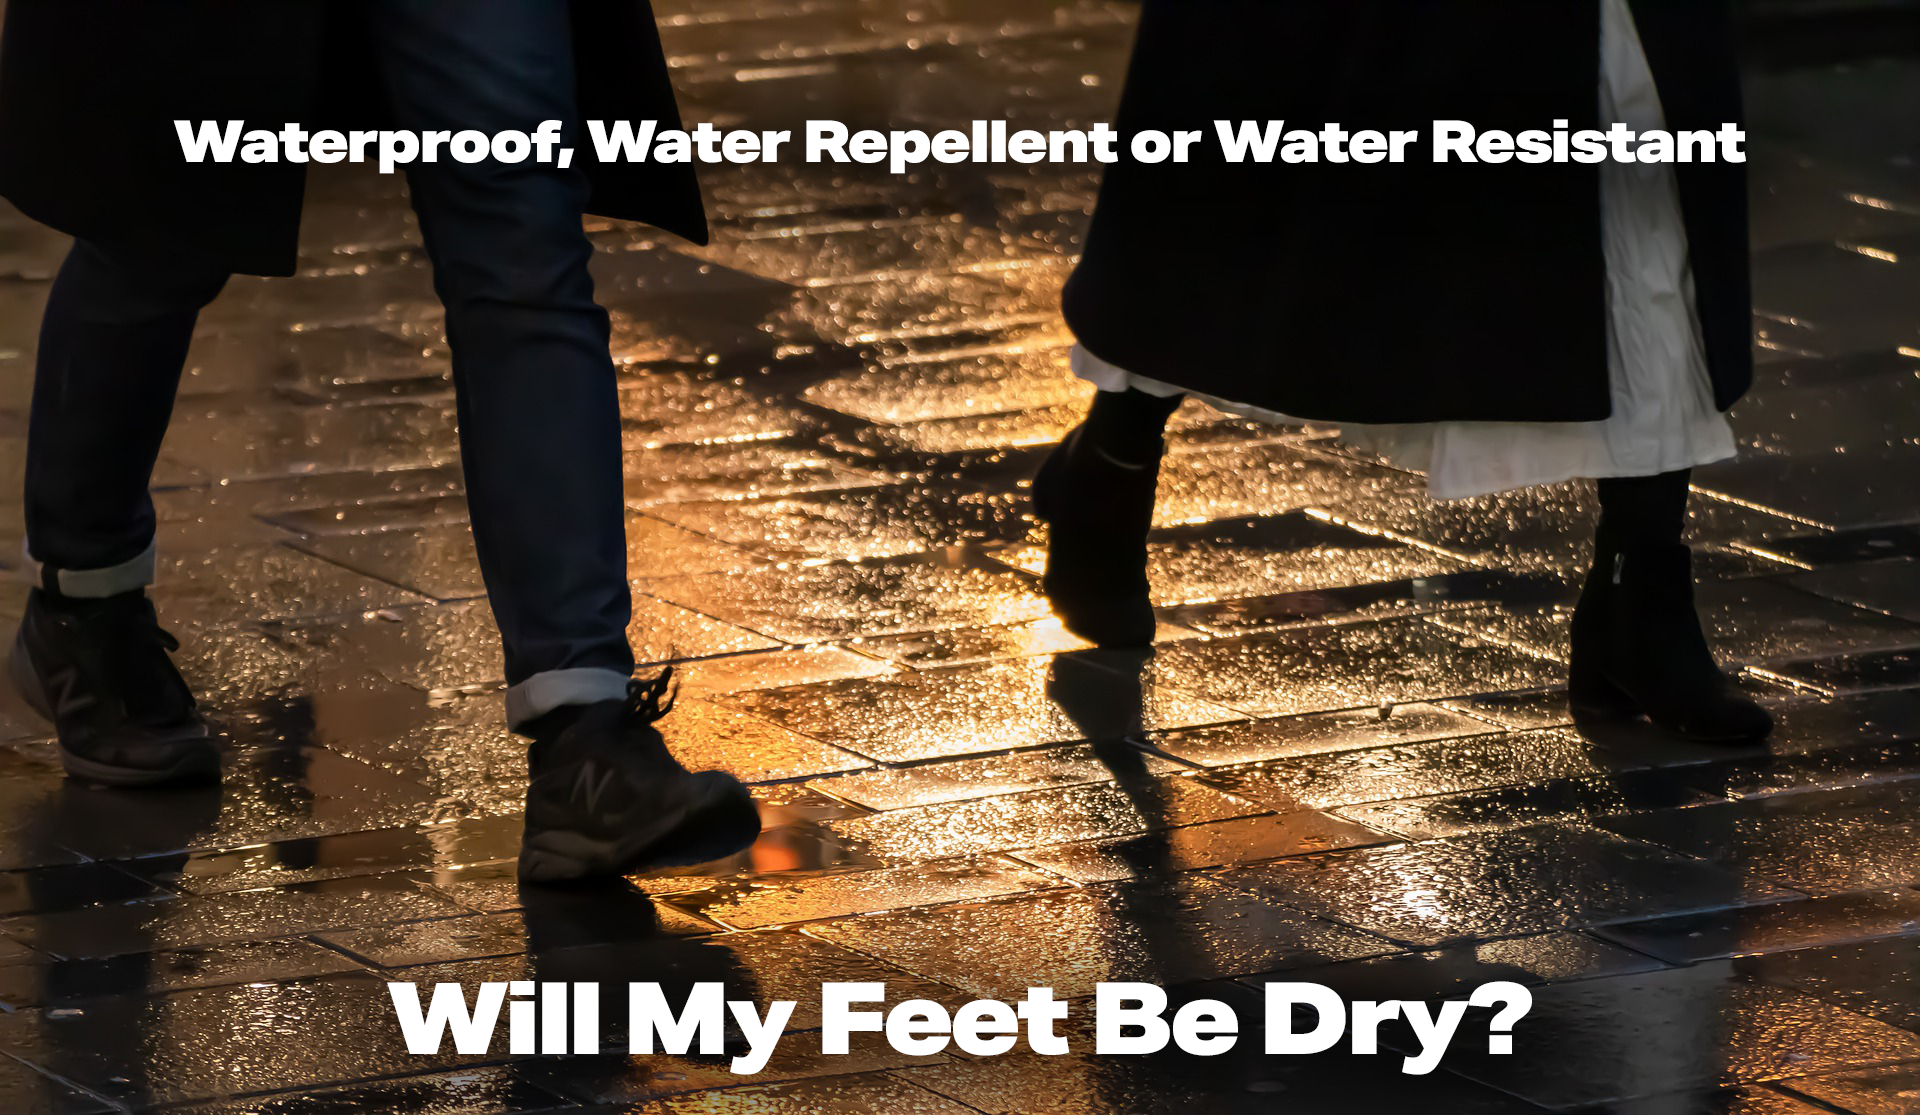 Waterproof, Water Repellent or Water Resistant; Will My Feet Be Dry?